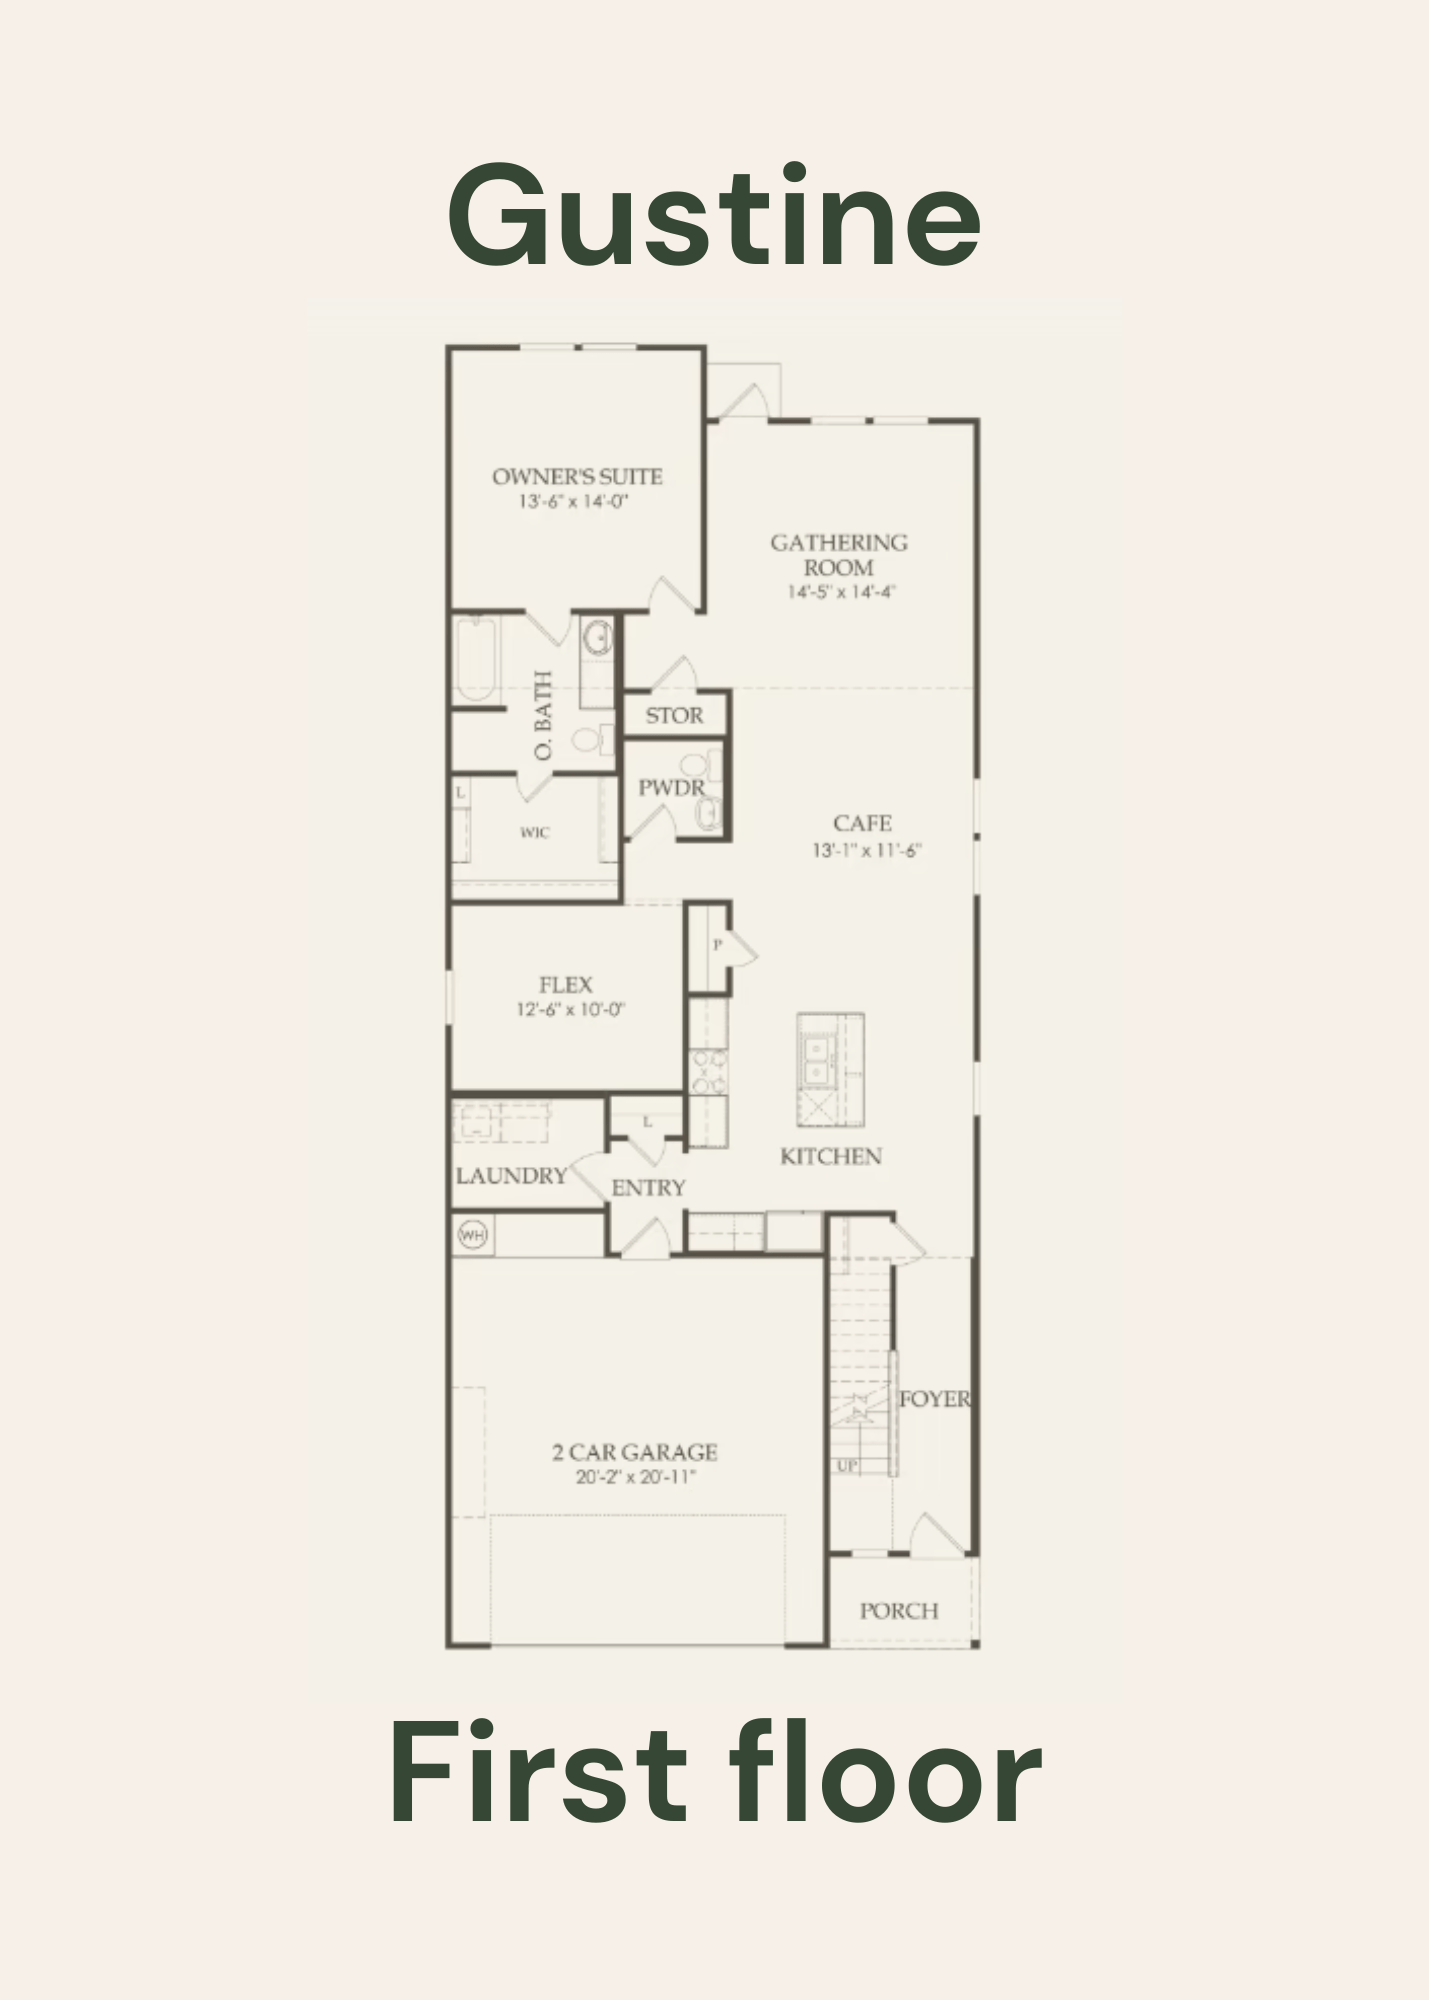 Gustine First Floor - Floor Plan by Centex Homes